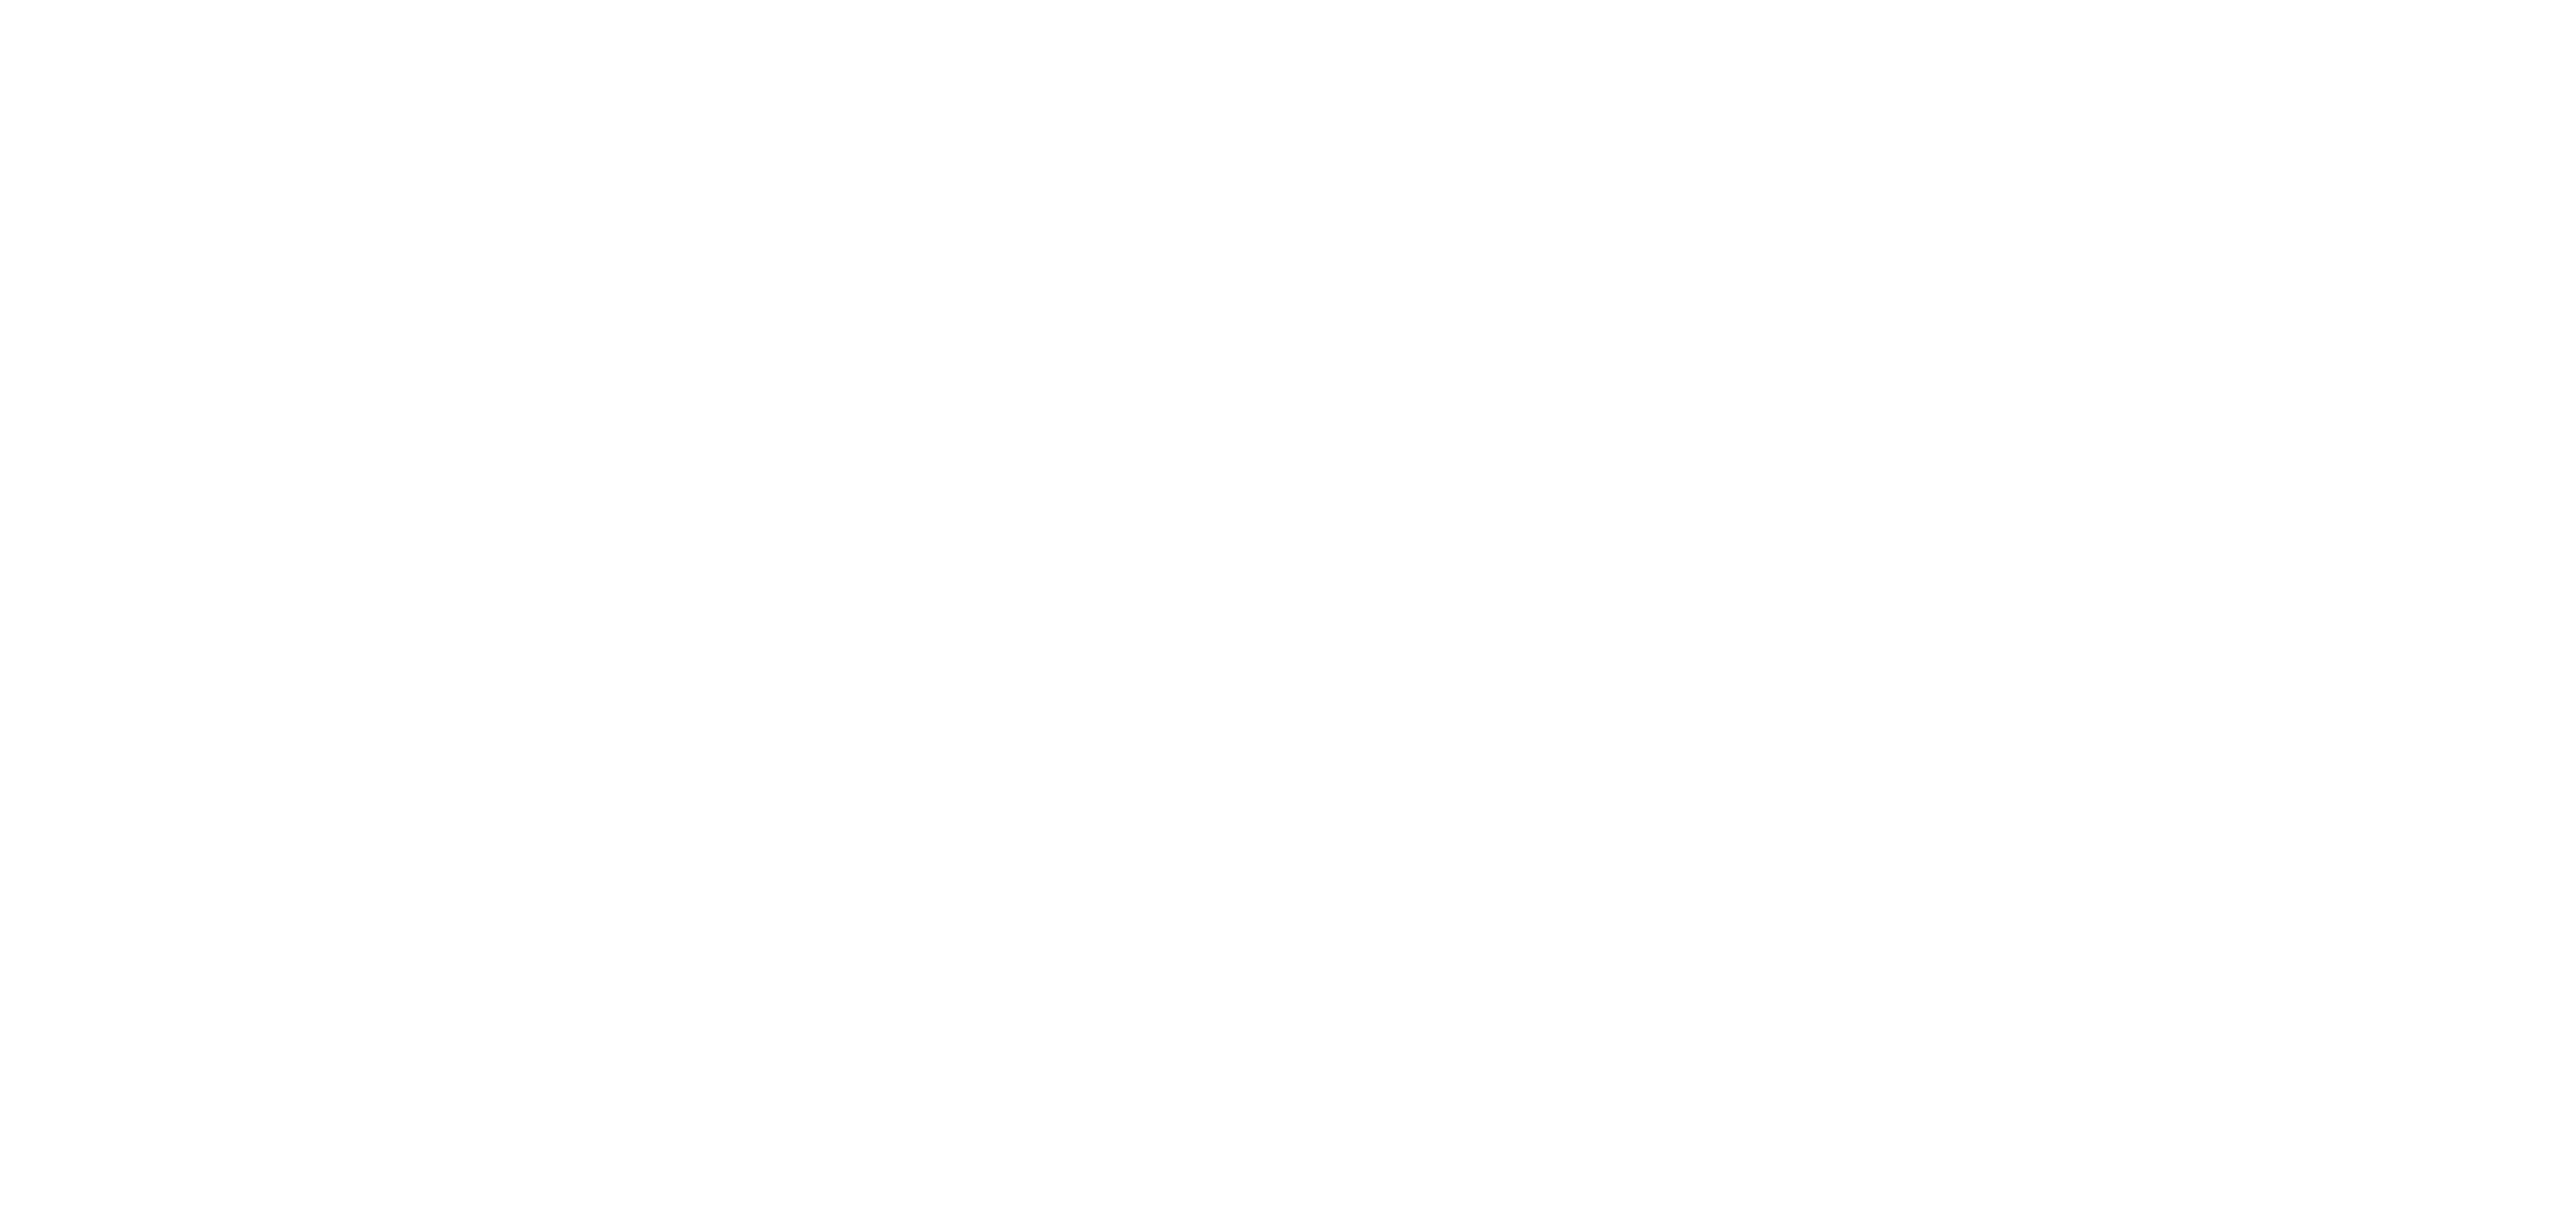 Enter Office